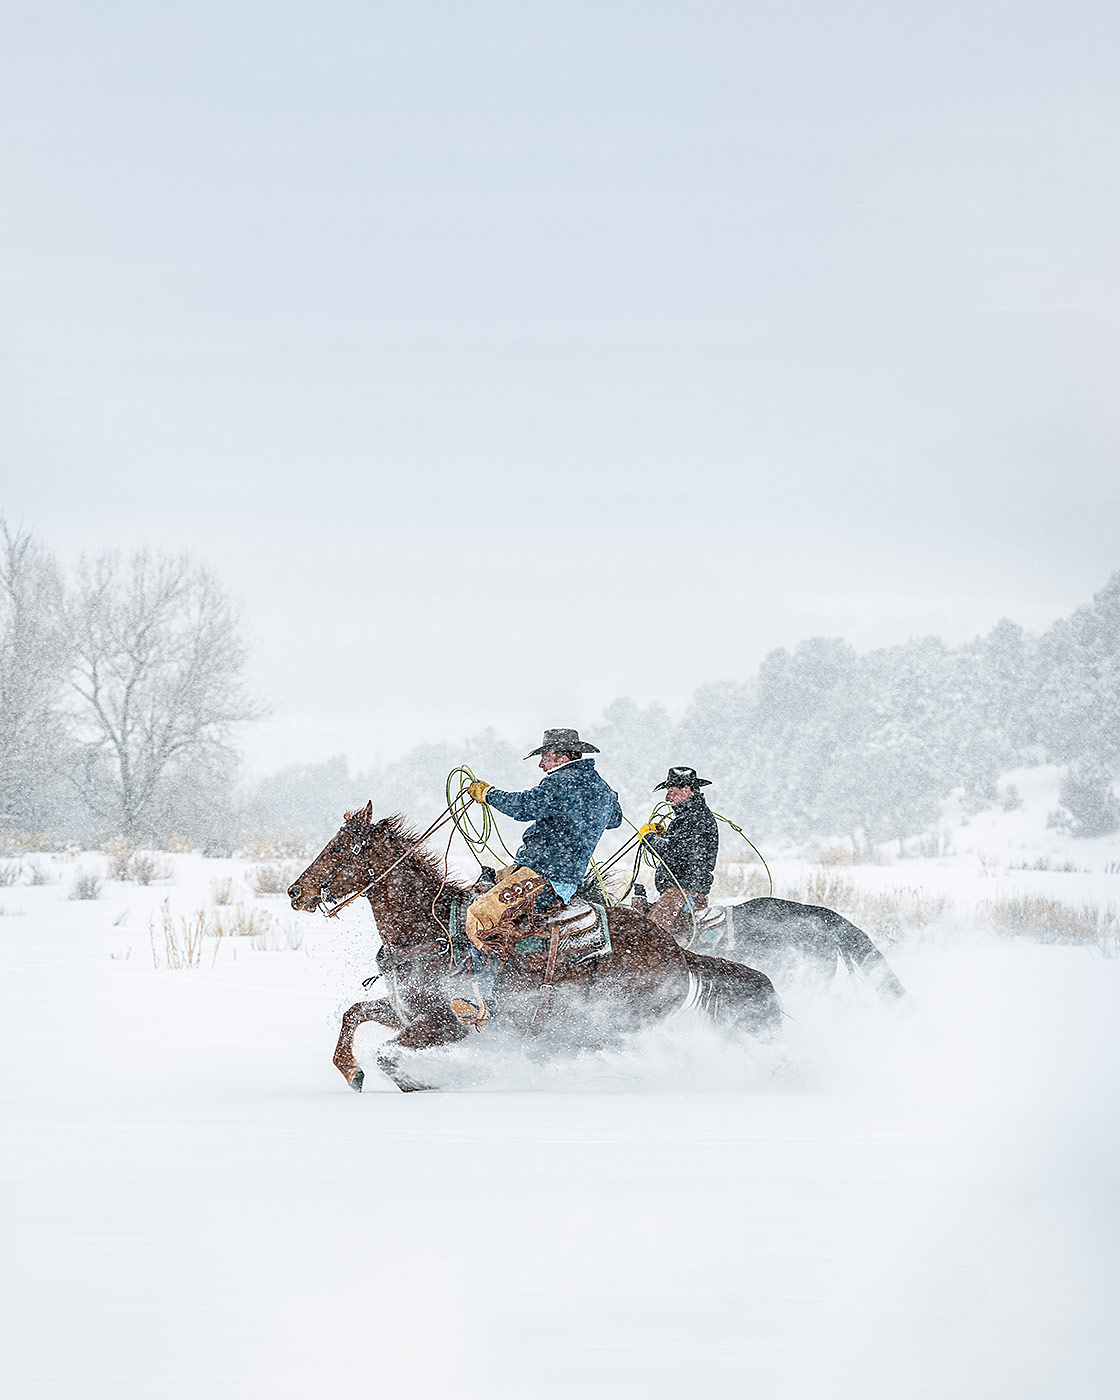 Cowboys on horses gallop through a snowstorm